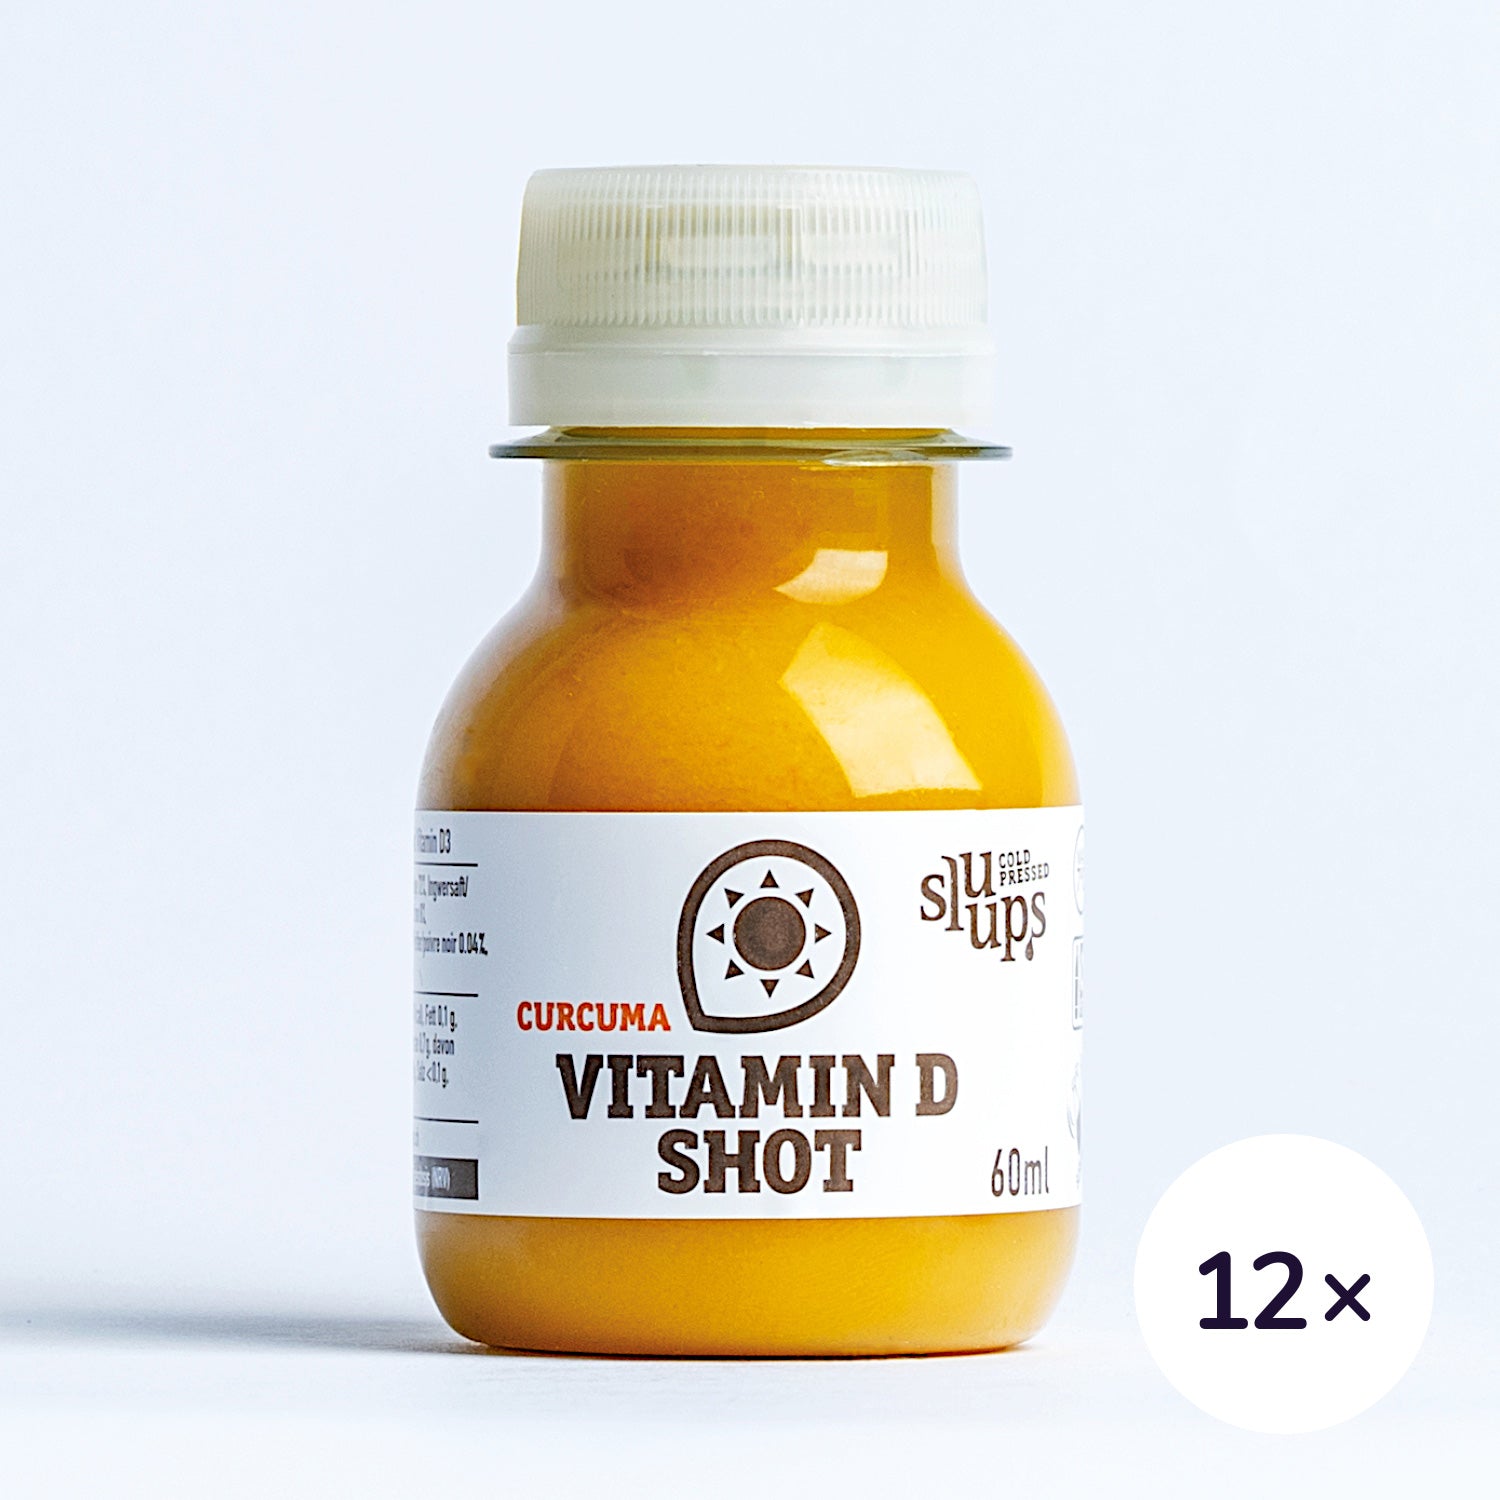 sluups Vitamin D Shot 60ml